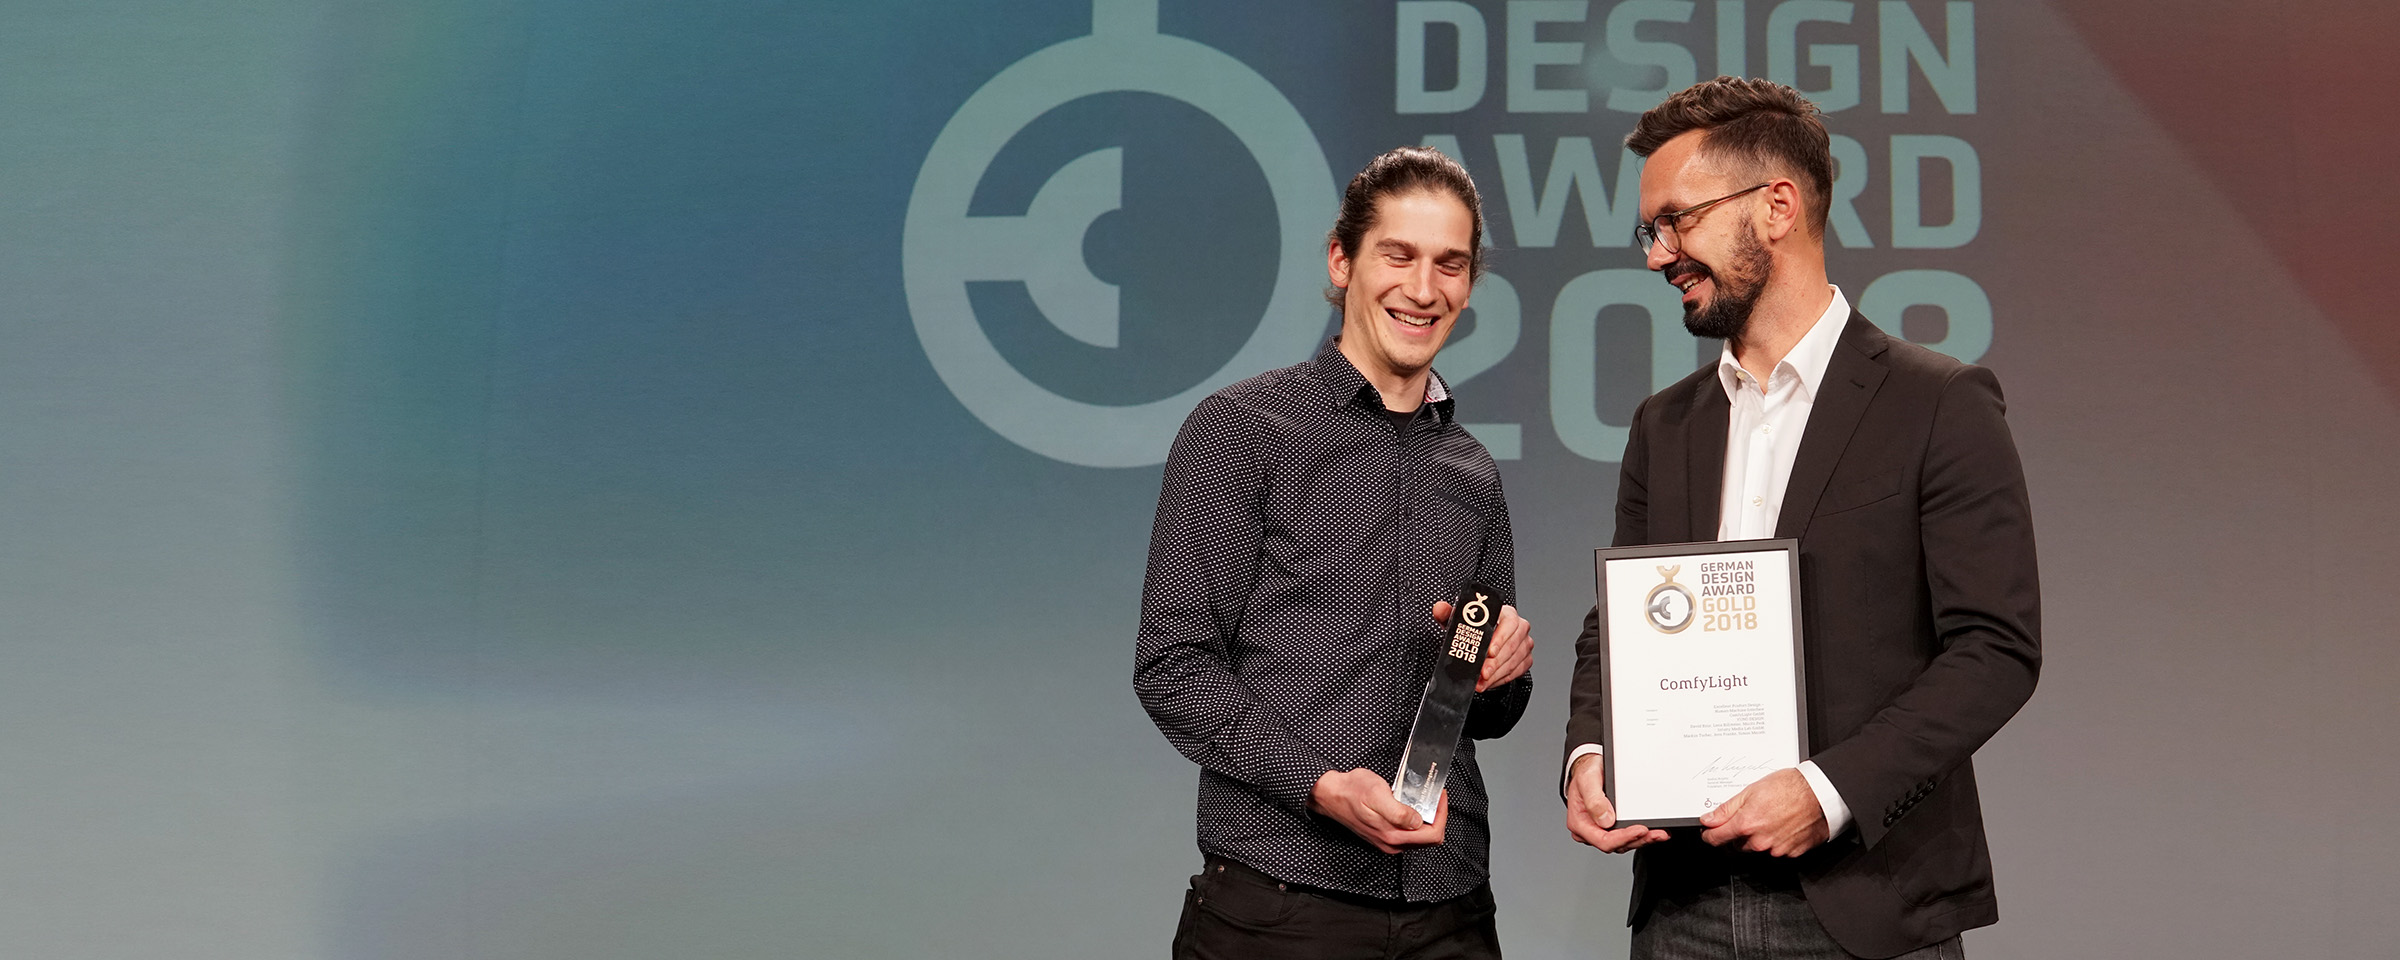 Preisverleihung des German Design Award 2018